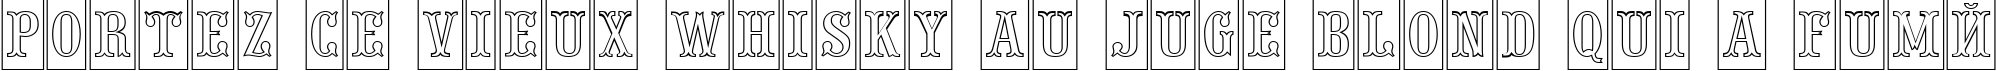 Пример написания шрифтом a_PresentumNrCmOtl текста на французском